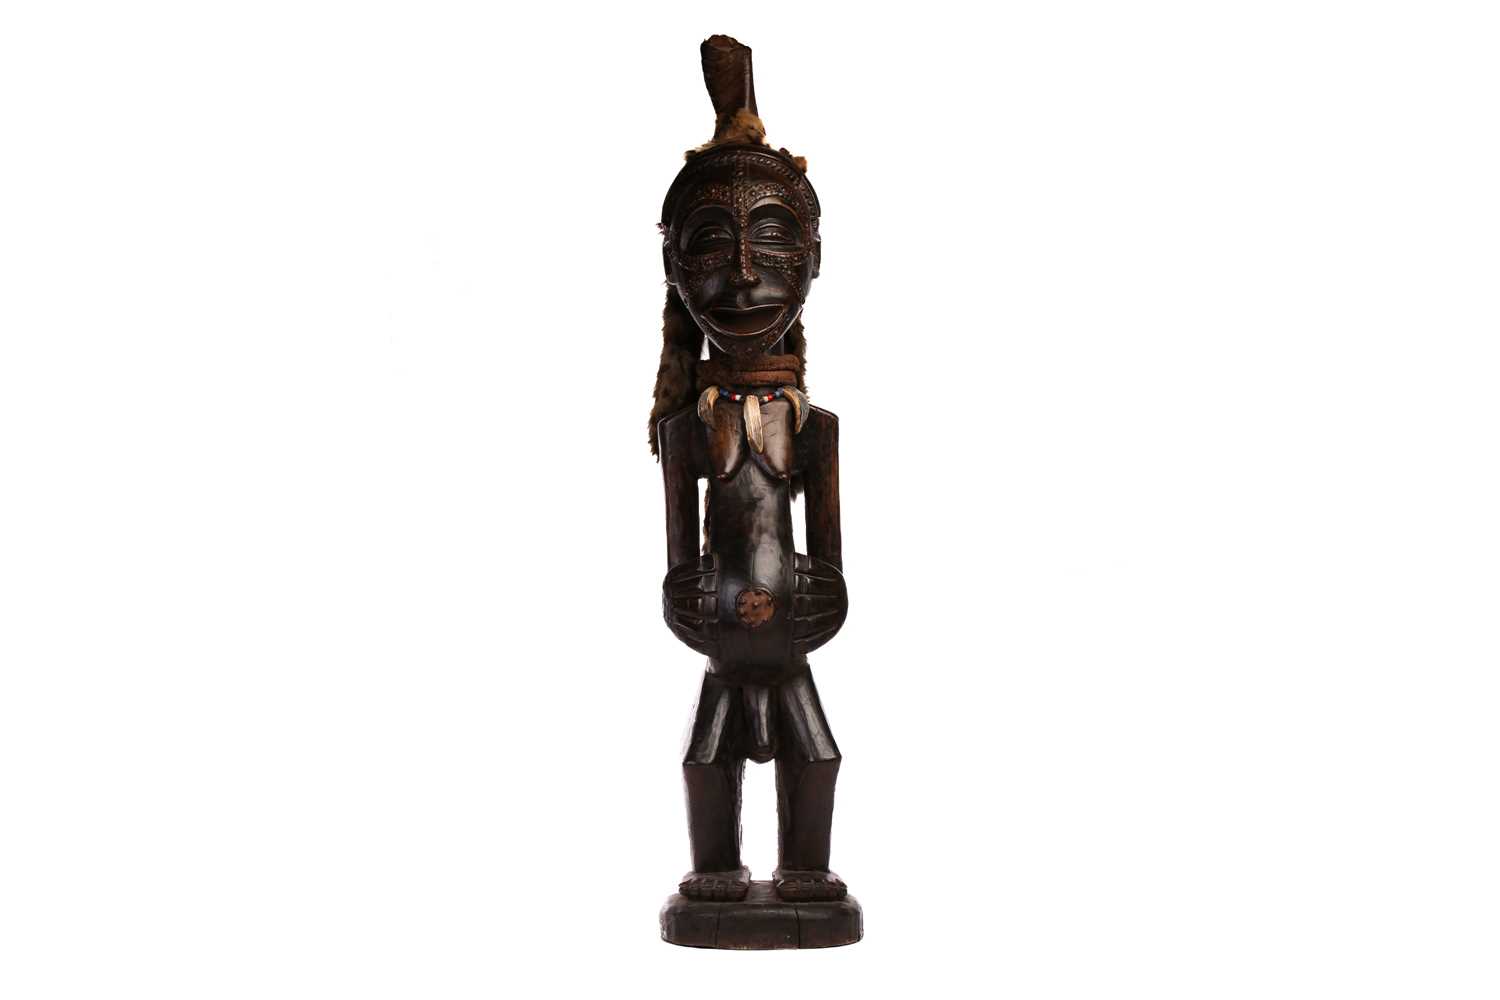 A Songye hermaphrodite power figure (Nkisi), Democratic Republic of Congo, twentieth century, the